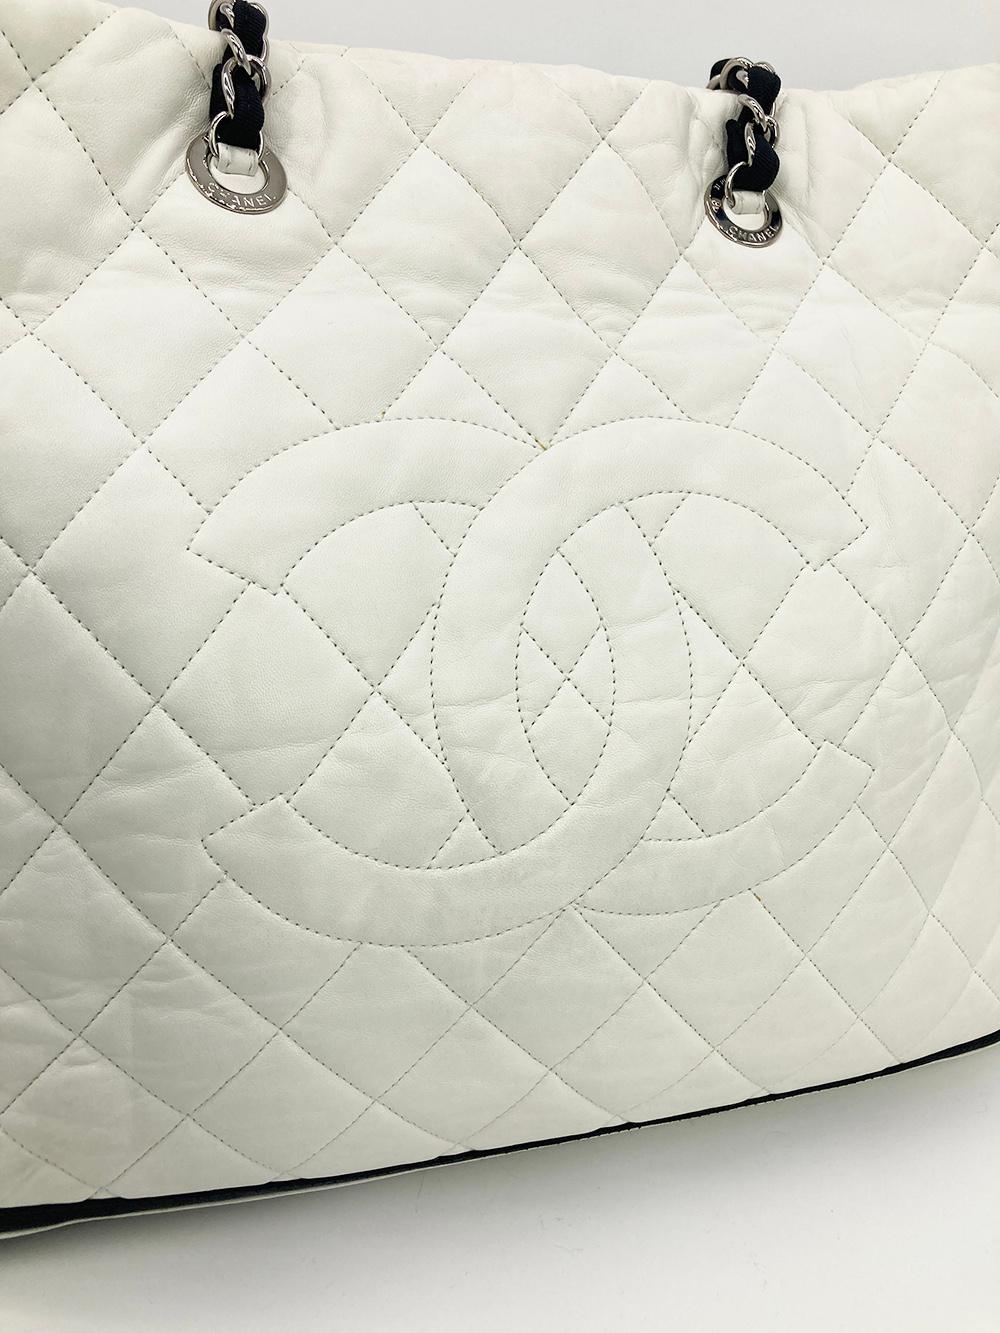 Chanel White Leather Black Grosgrain Quilted CC Shoulder Bag Tote 3